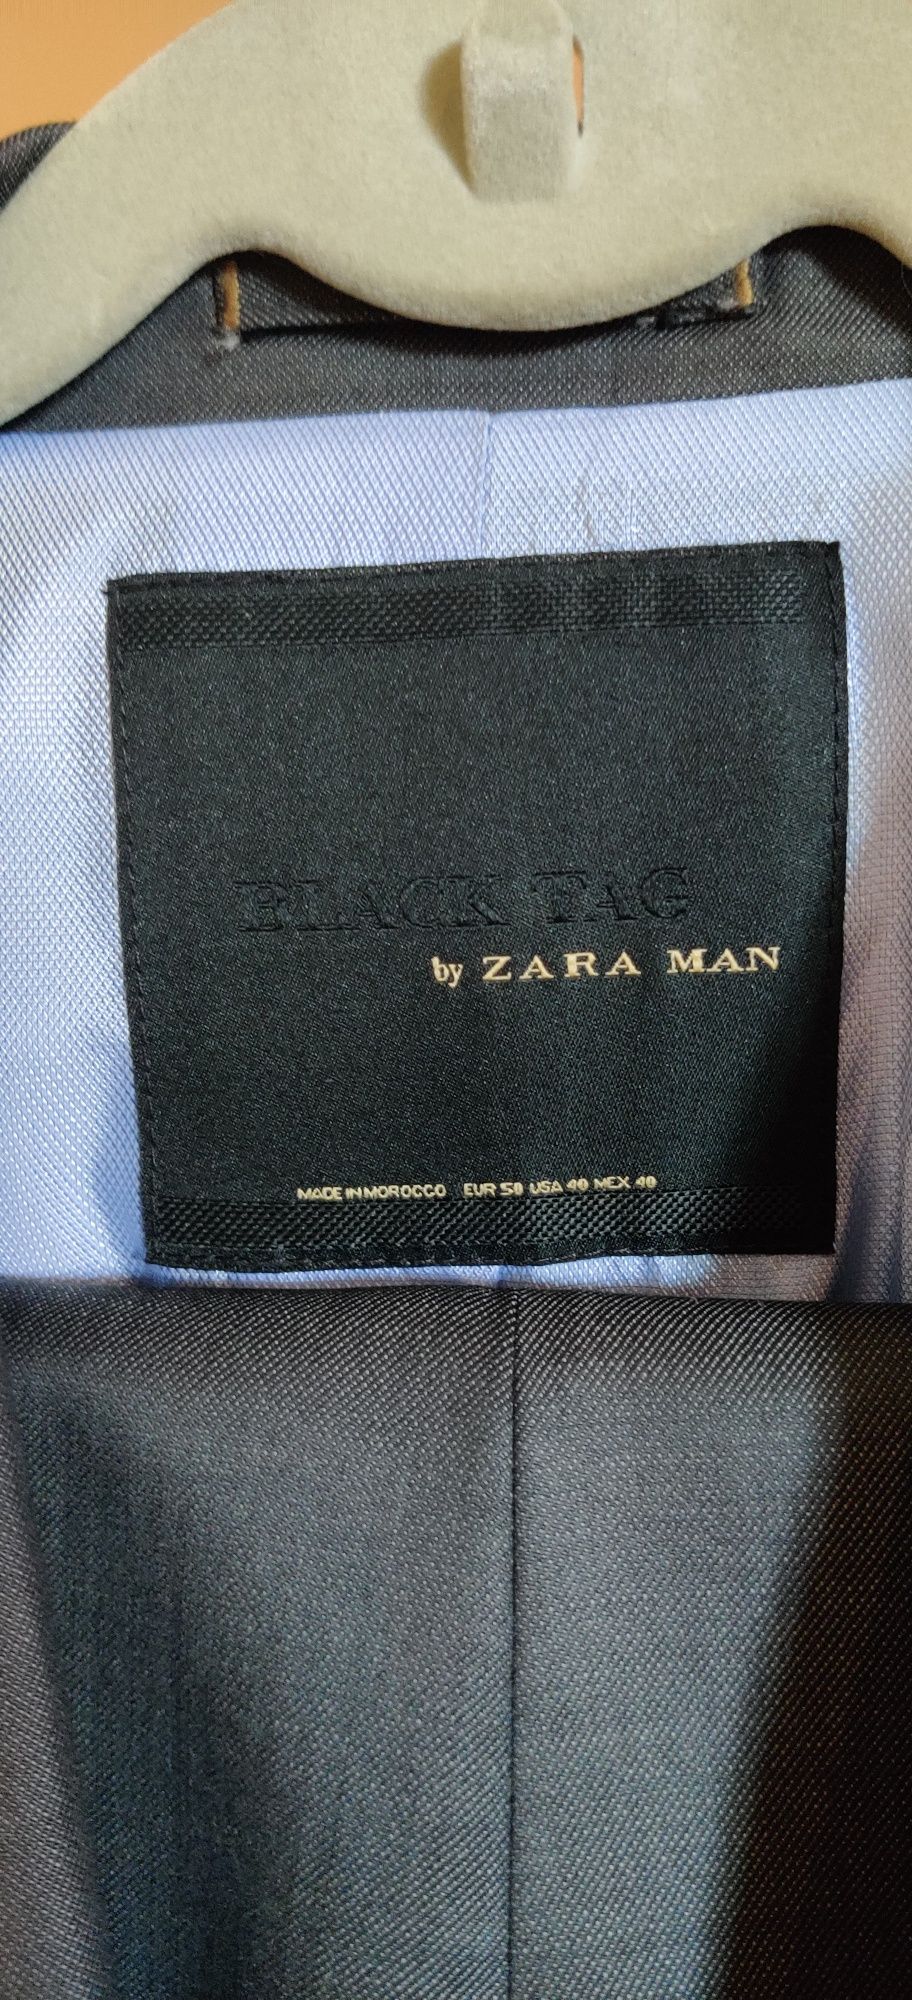 Costum ocazie - Zara Man Black tag - mărime 50